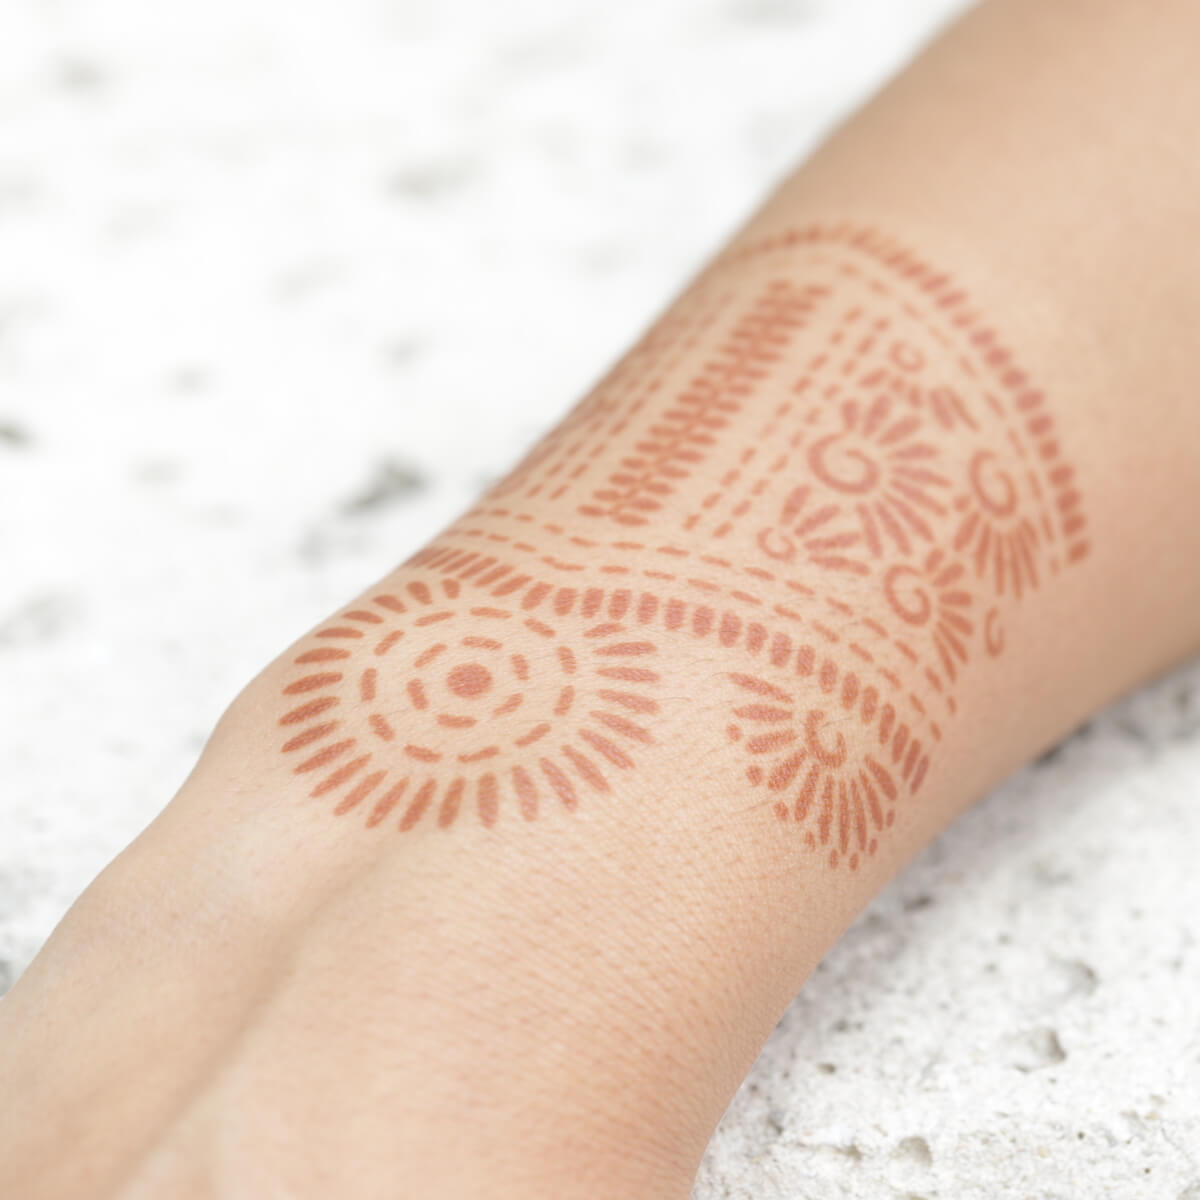 Aphrodite - close up of bangle henna design on wrist